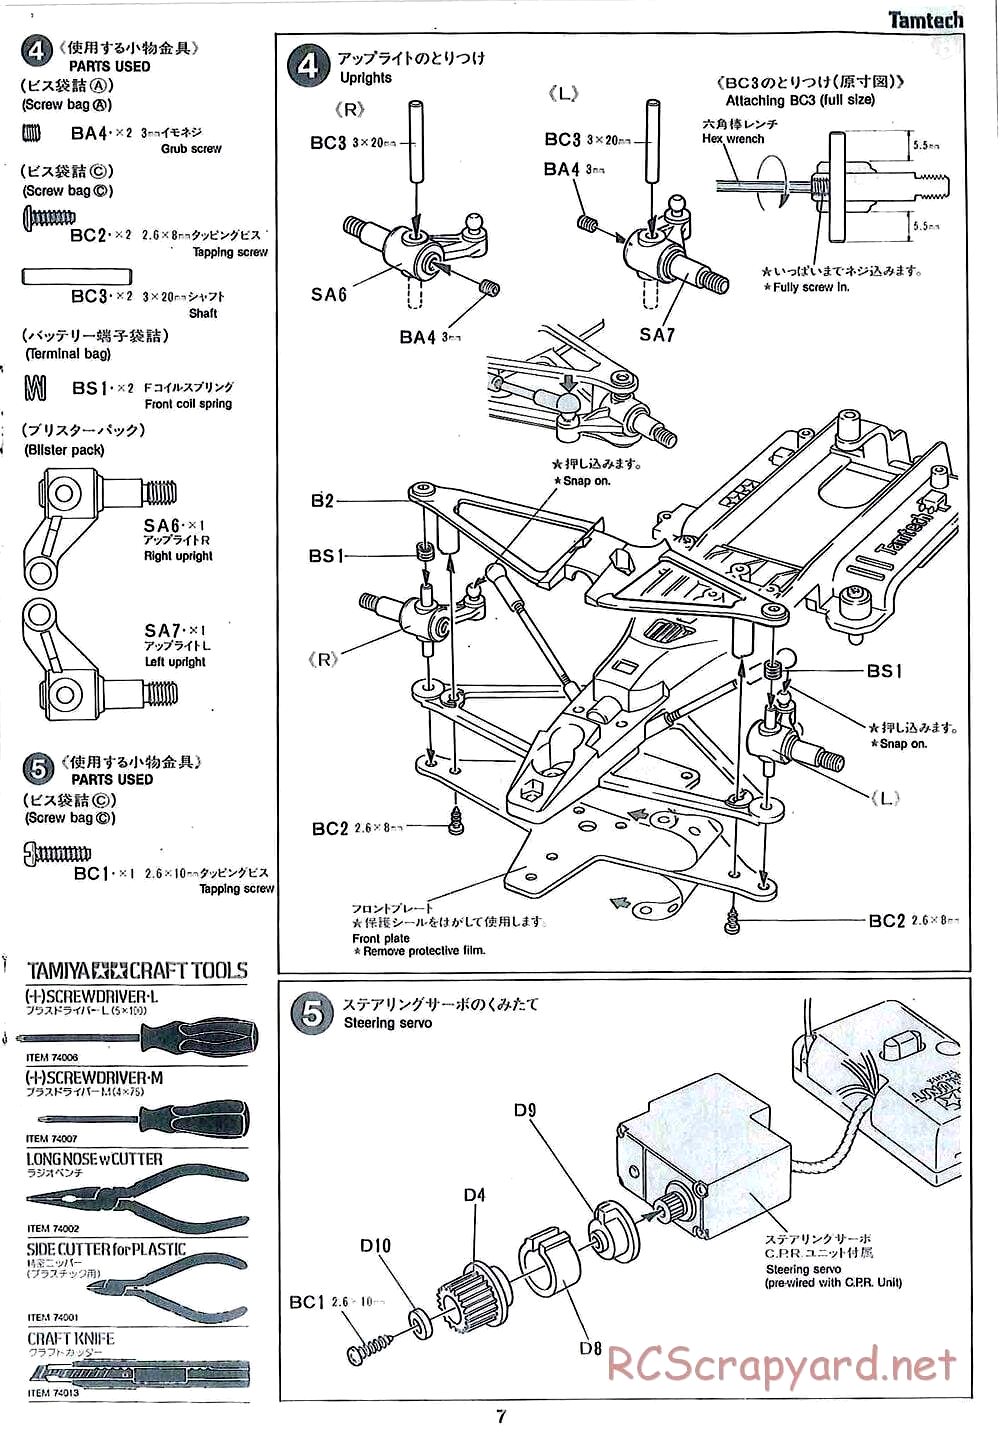 Tamiya - TamTech - F1 Chassis - Manual - Page 7